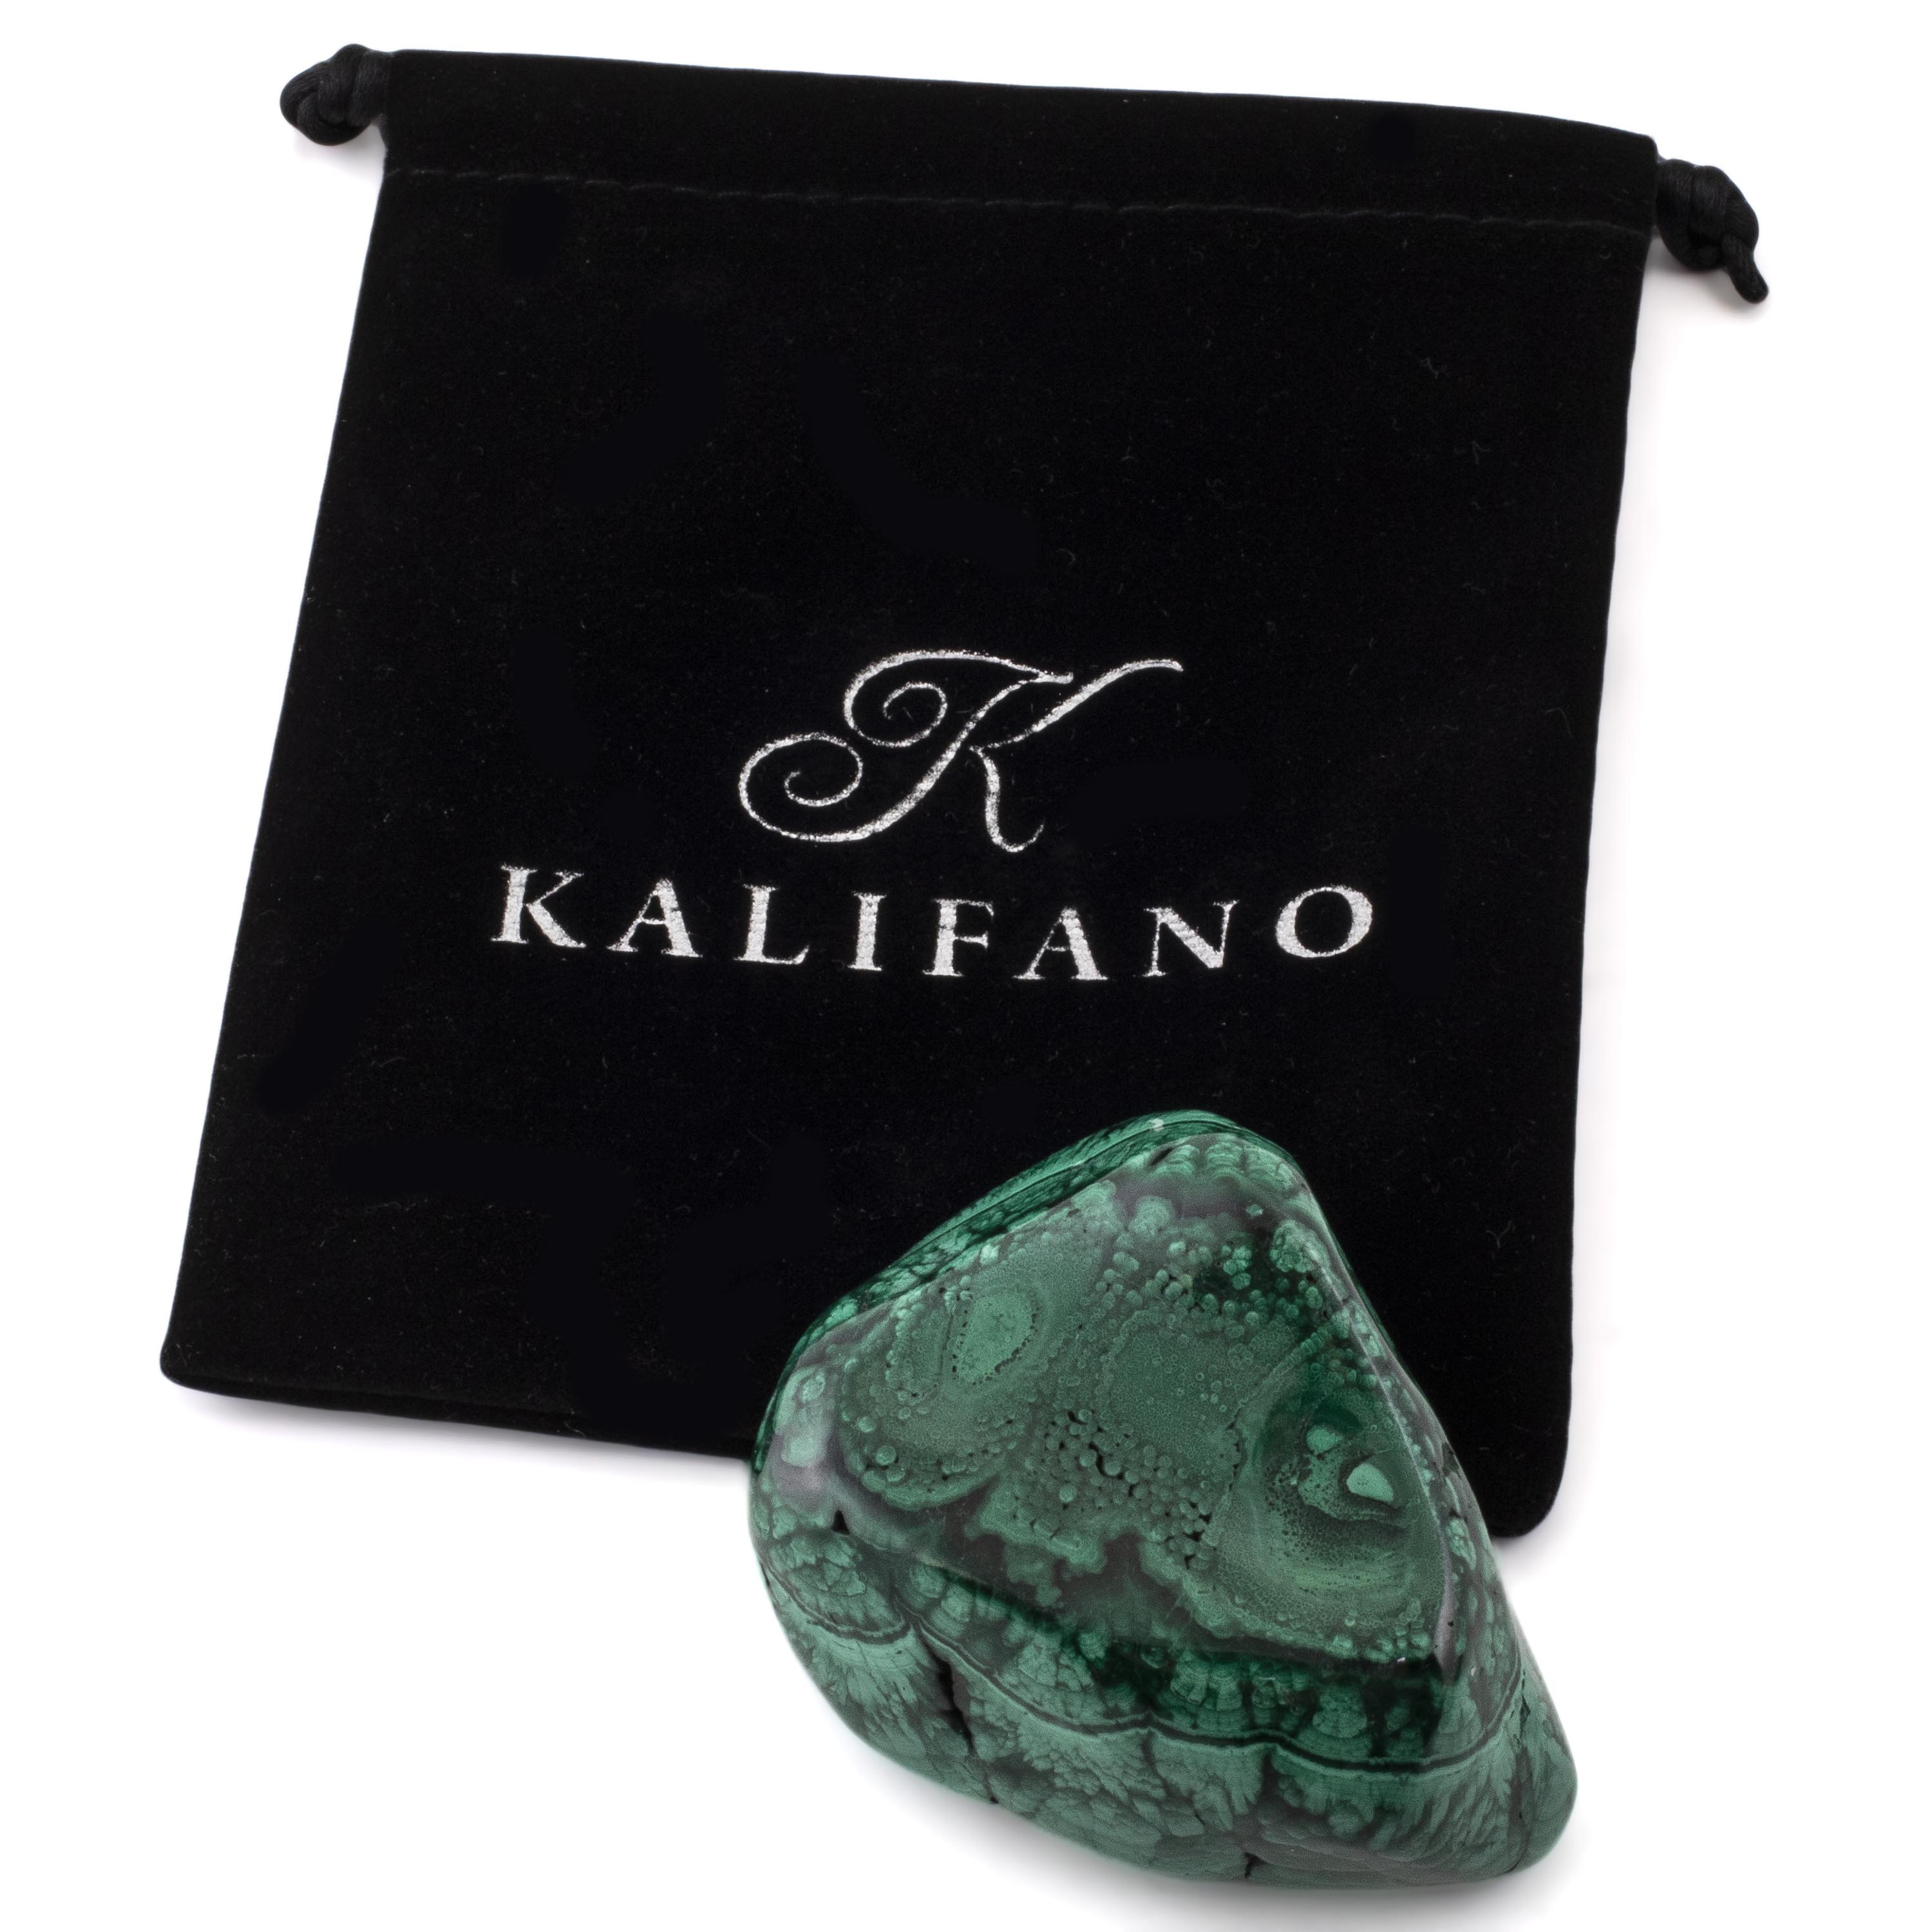 Kalifano Malachite Natural Malachite Freeform From Congo - 2" / 140g MA140